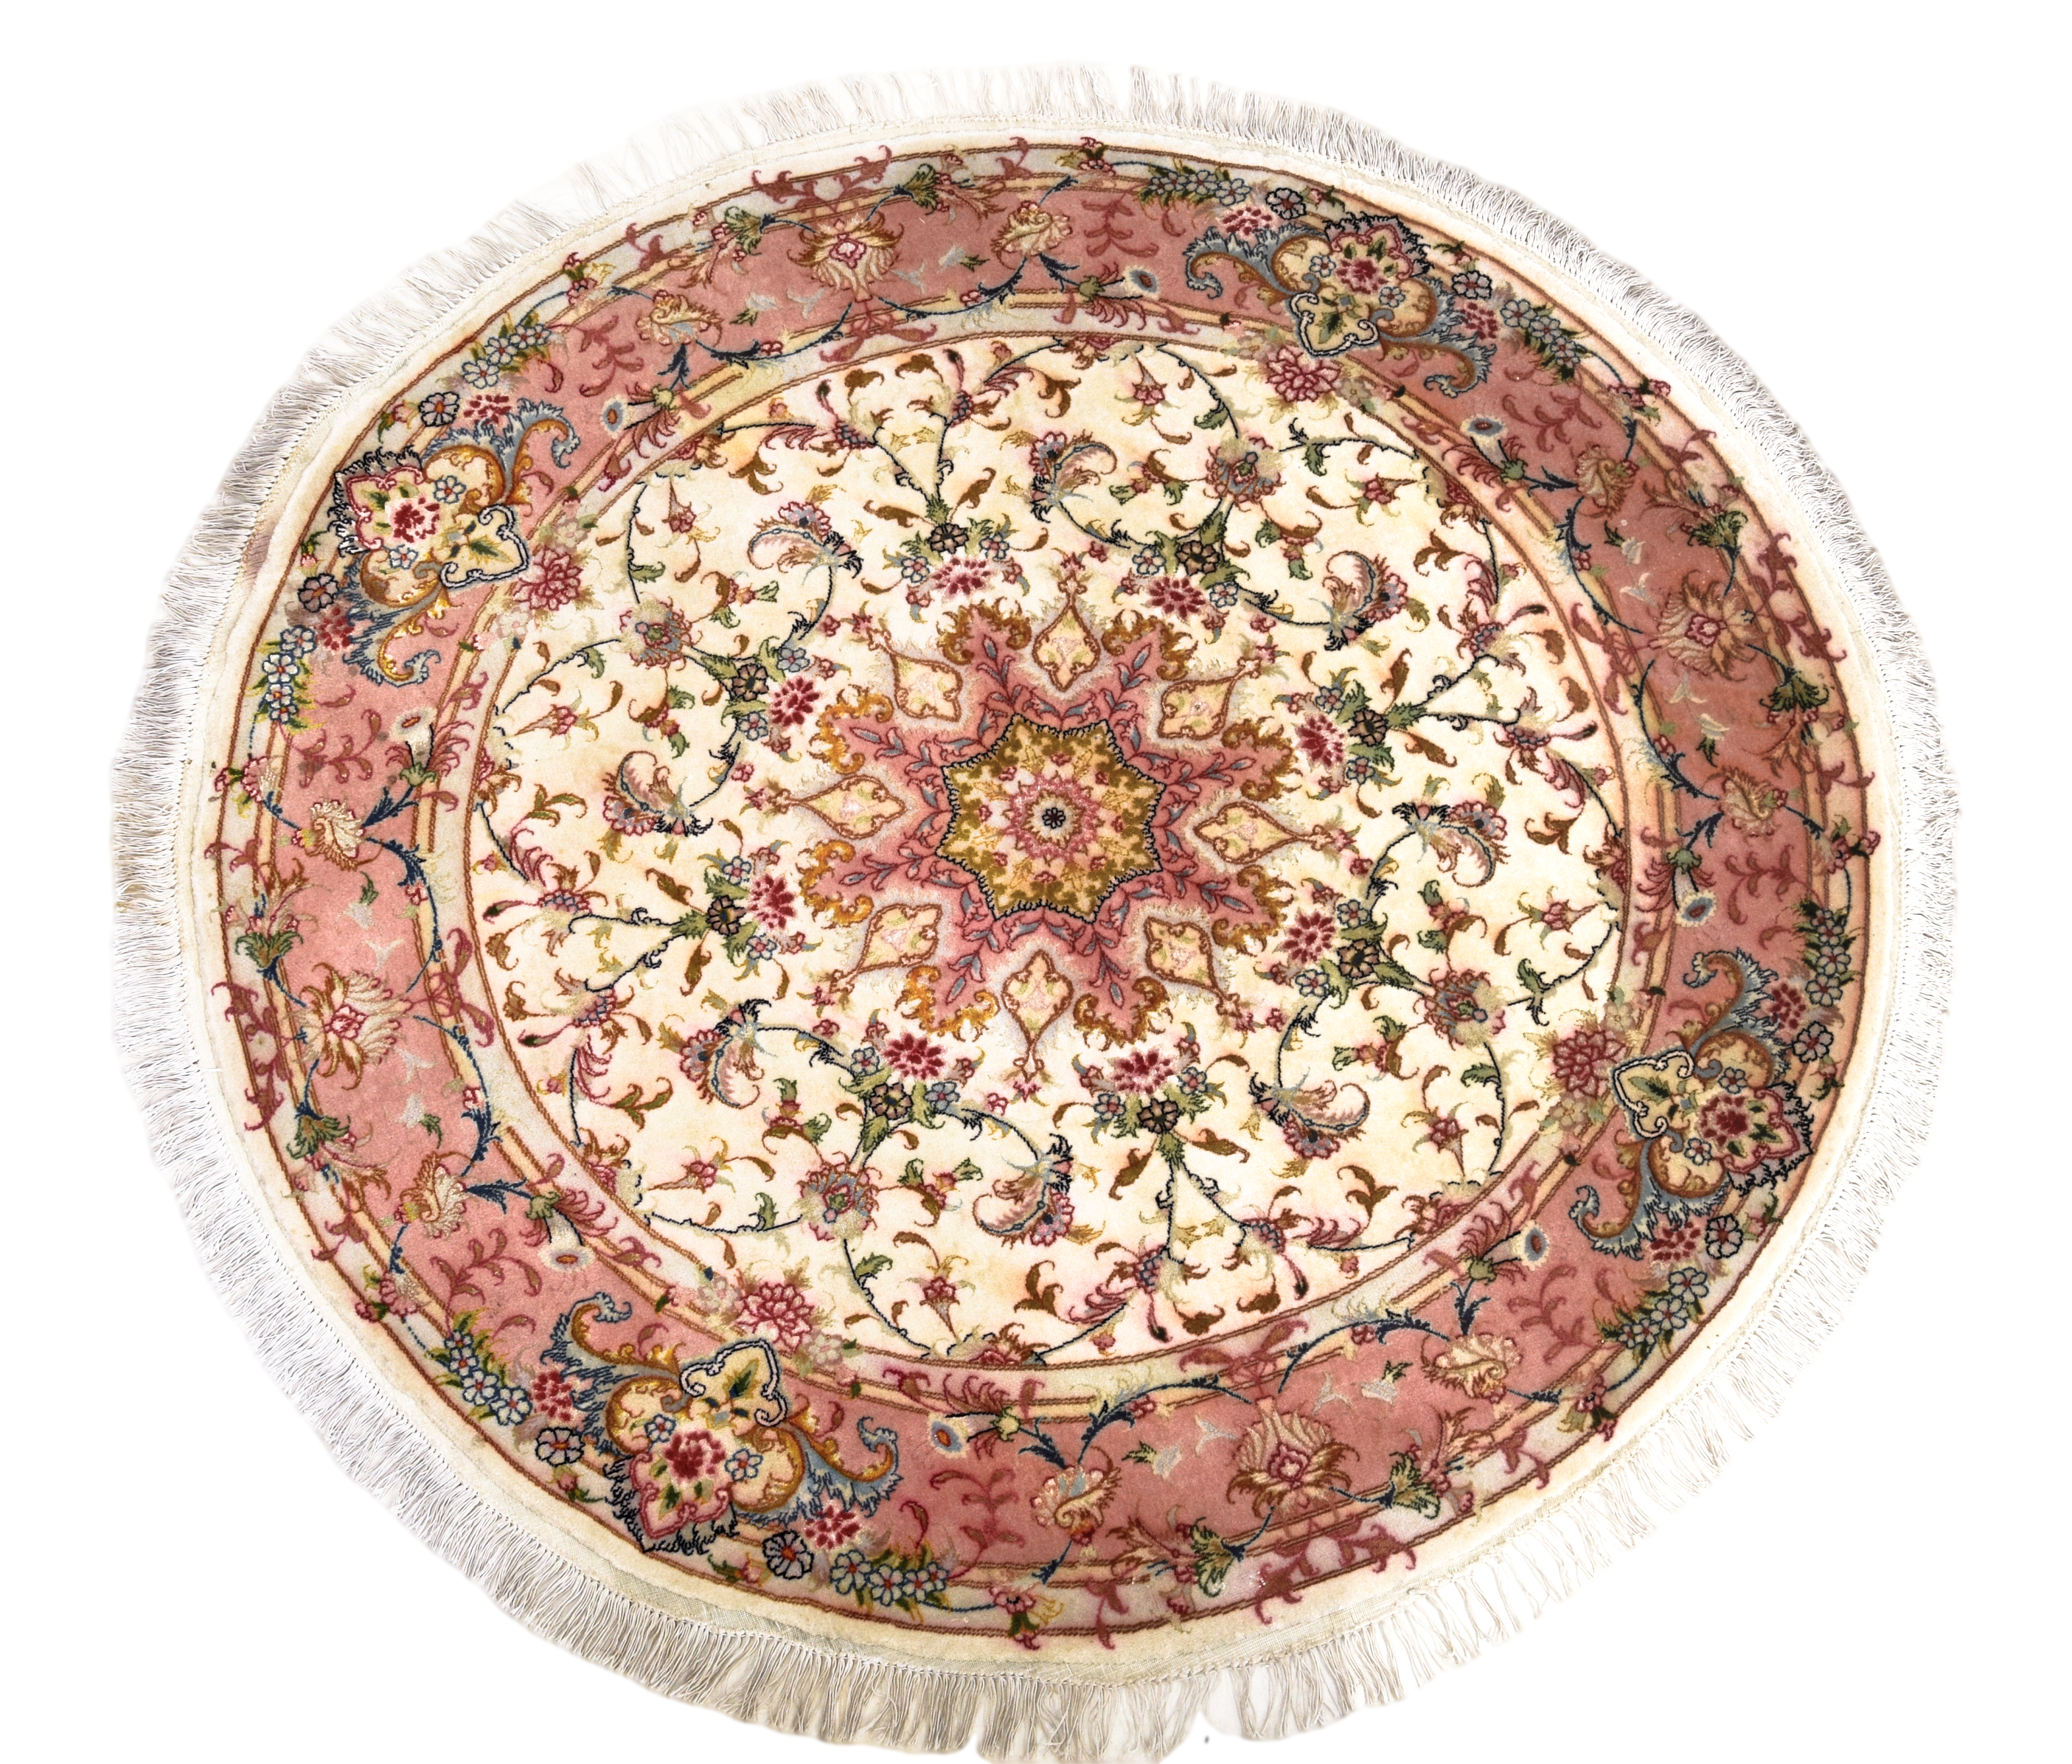 A Tabriz circular part-silk rug, late 20th century, the central eight point medallion on an ivory